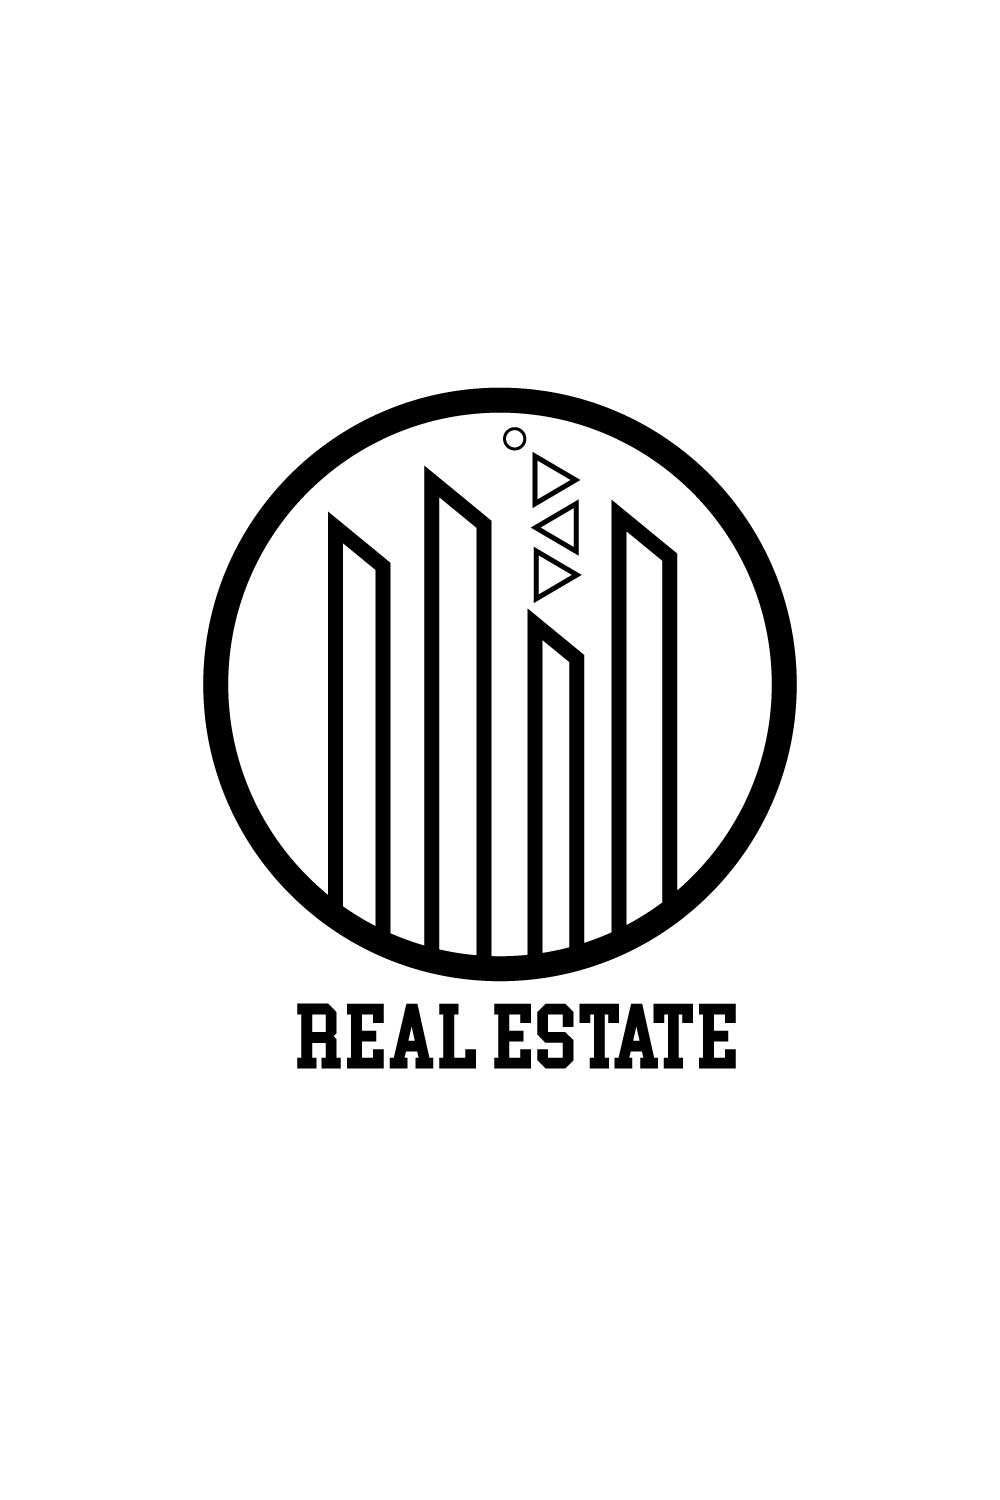 Real Estate logo design | Logo design pinterest preview image.